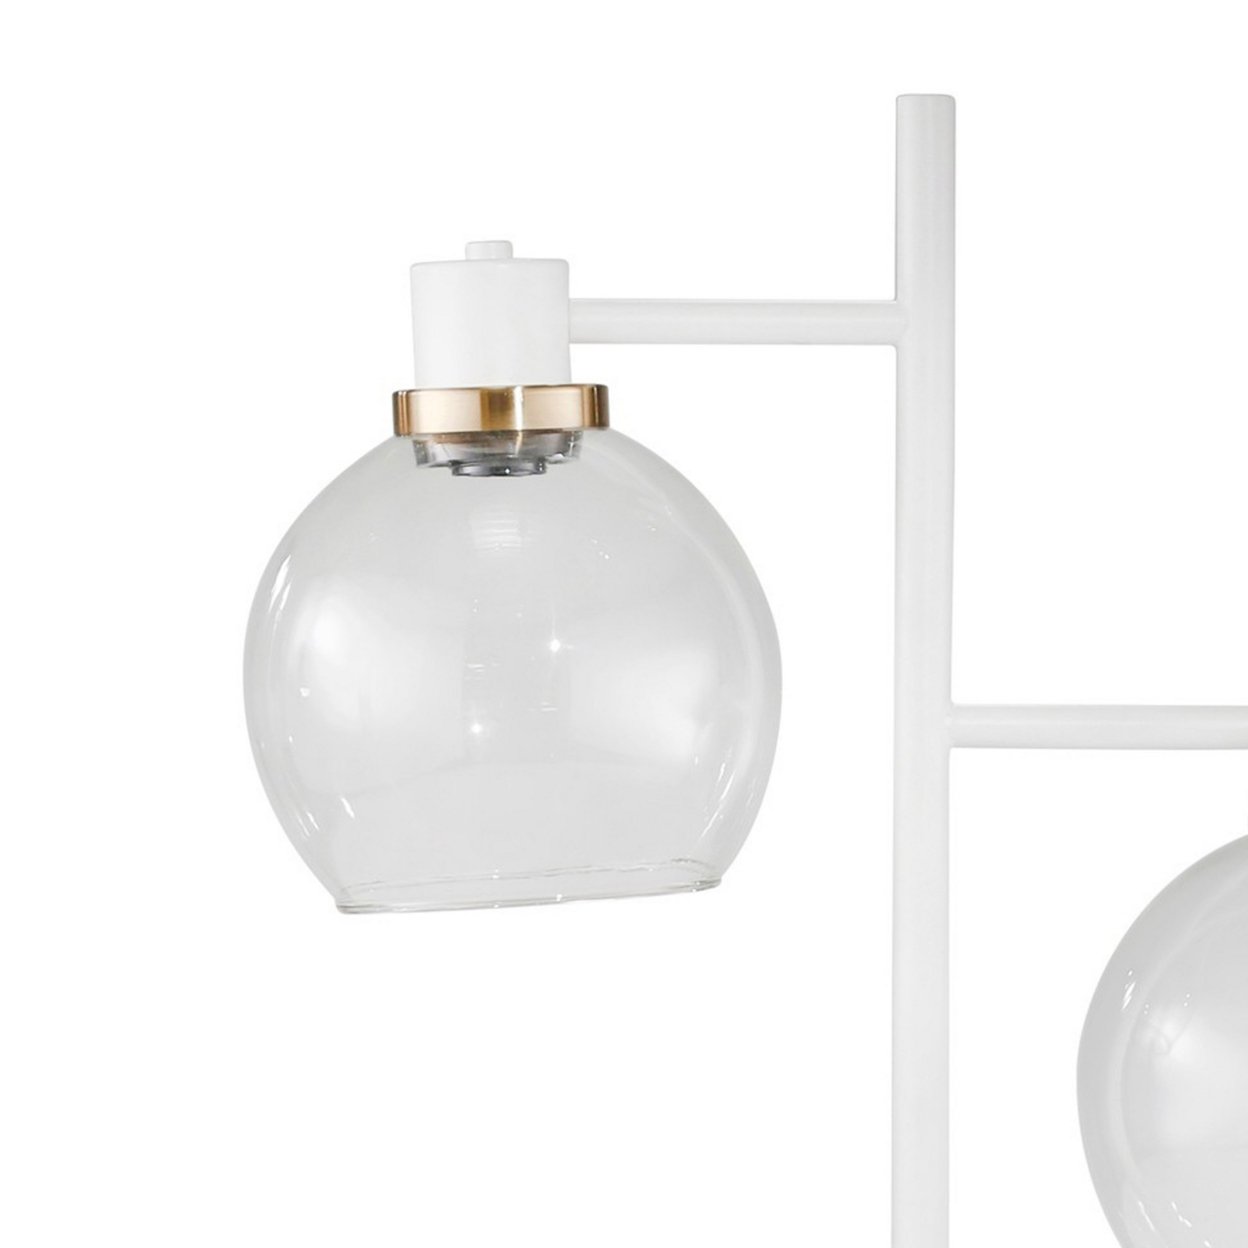 2 Globe Glass Table Lamp With Sleek Tubular Support, White- Saltoro Sherpi